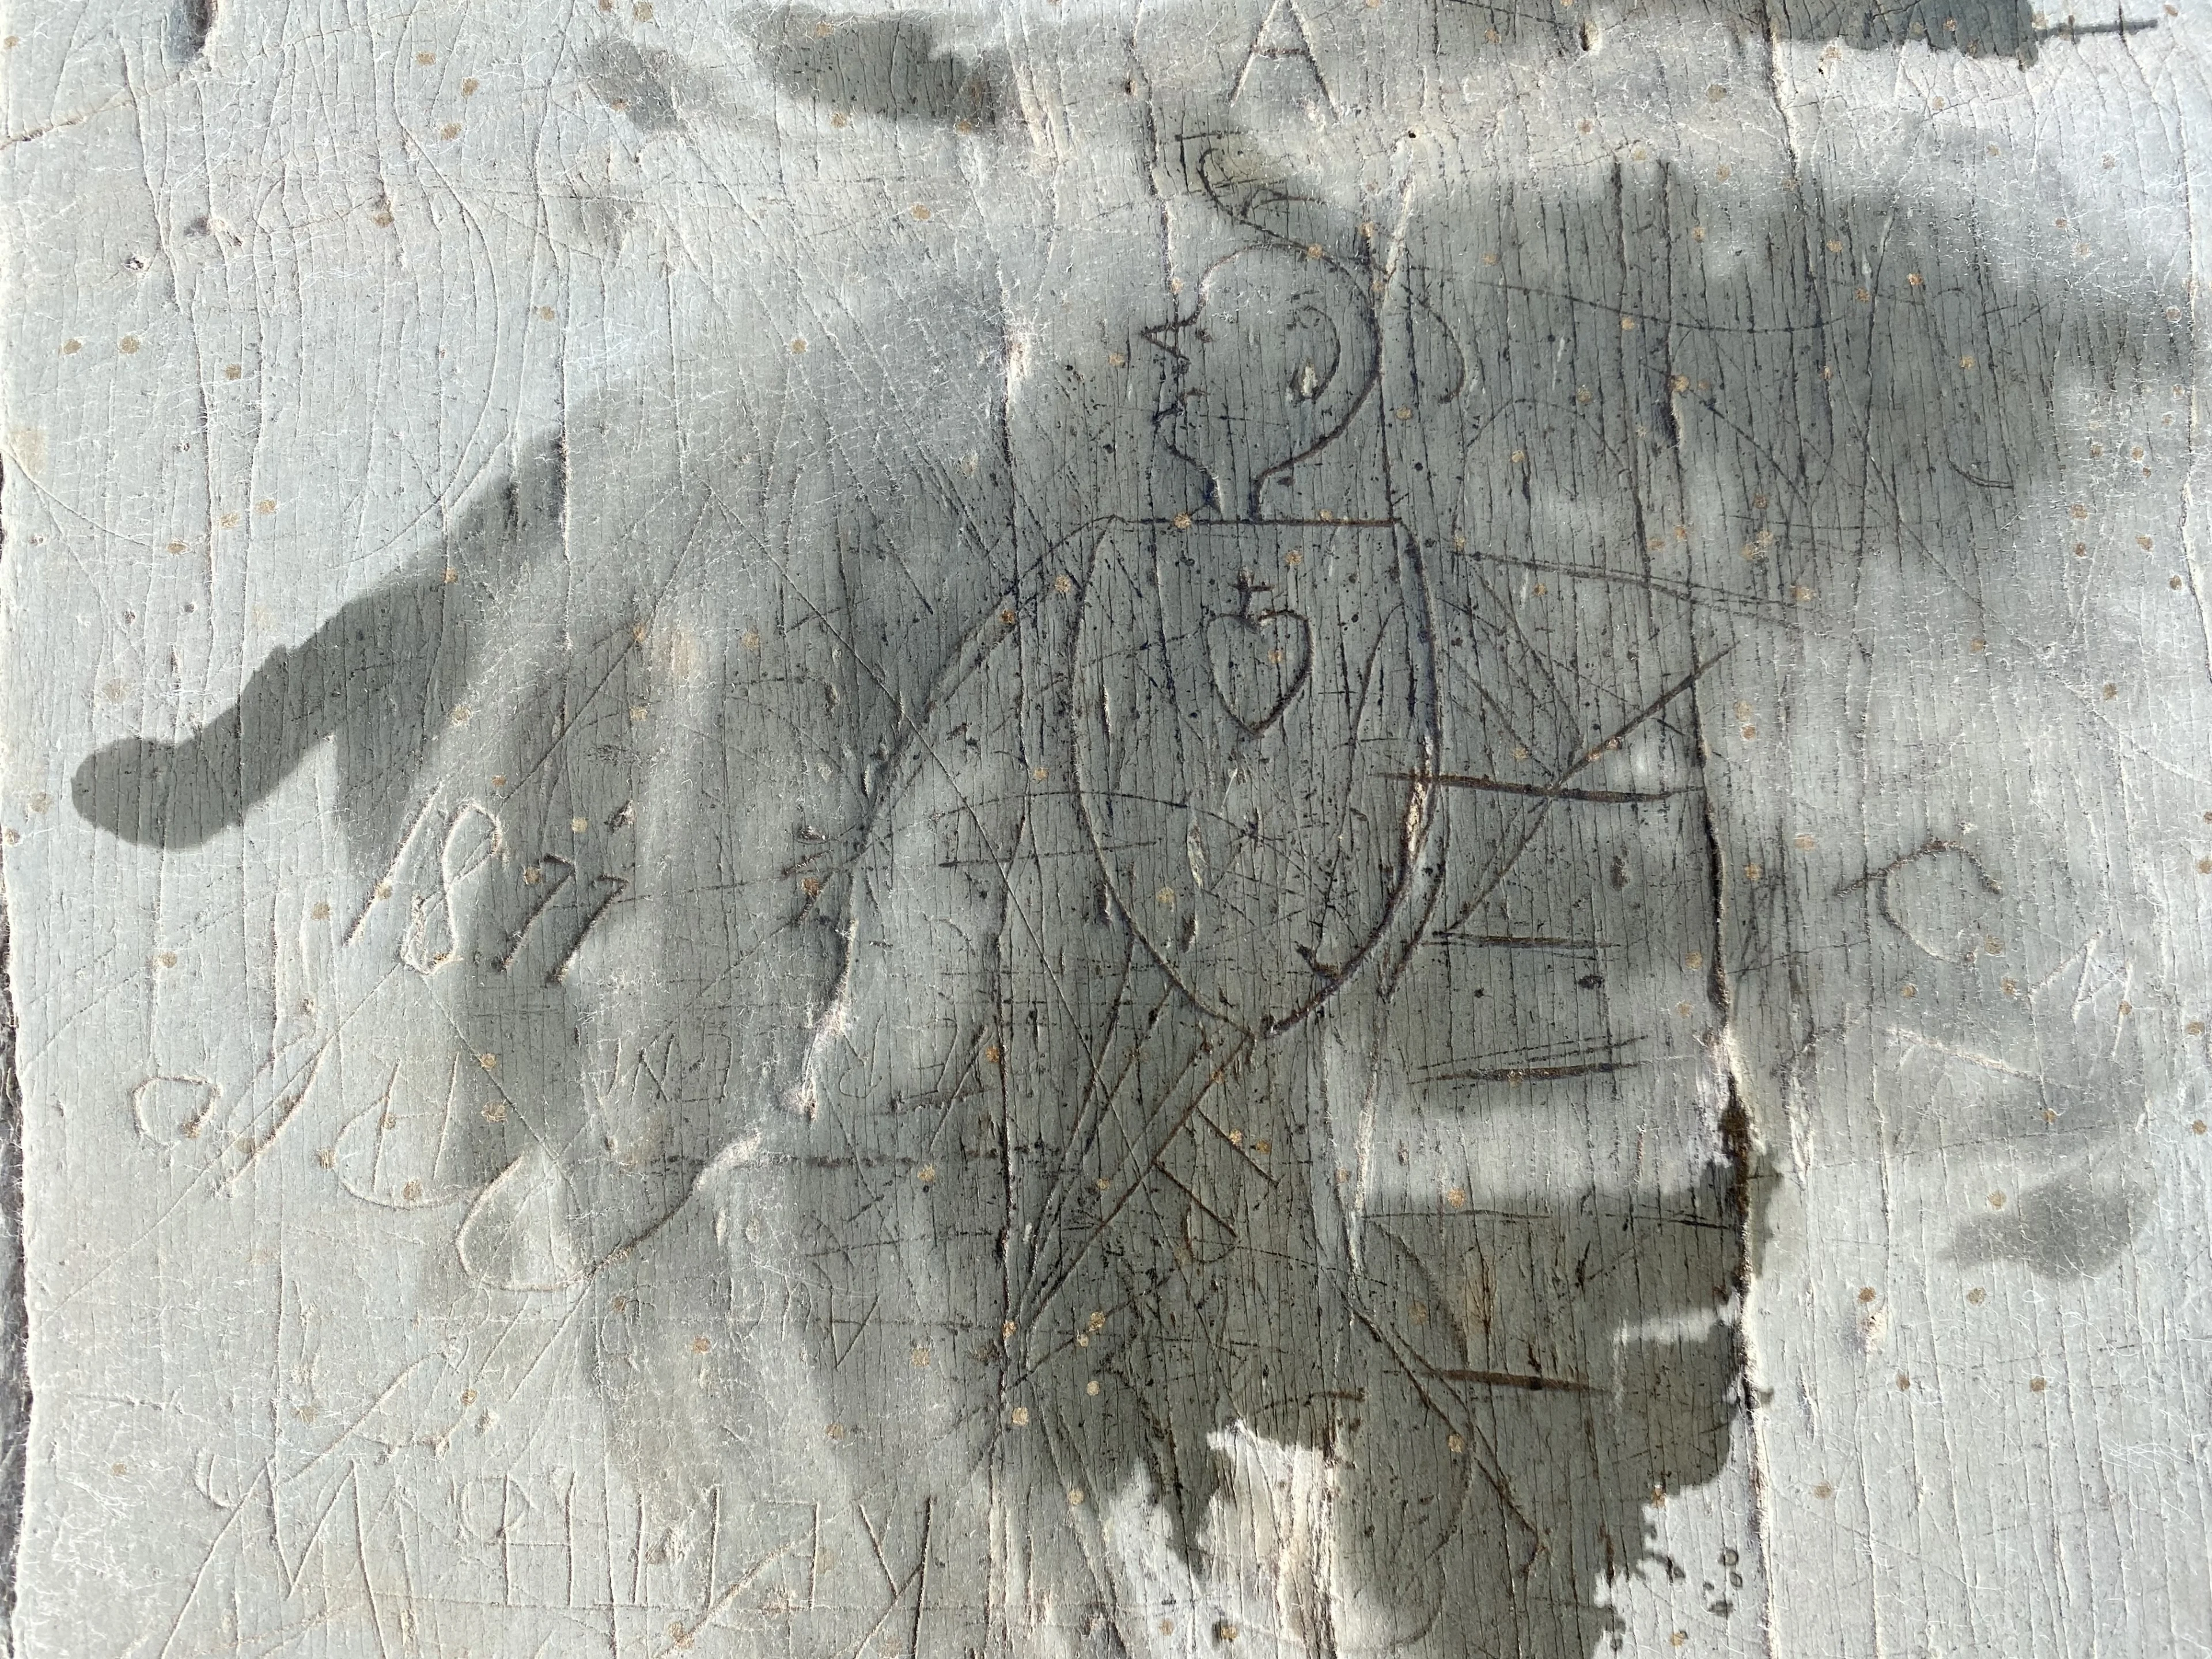 NATHAN COLEMAN: Petroglyph at Kejimkujik historic site. Parks Canada protetects Mi'kmaq cultural landscape